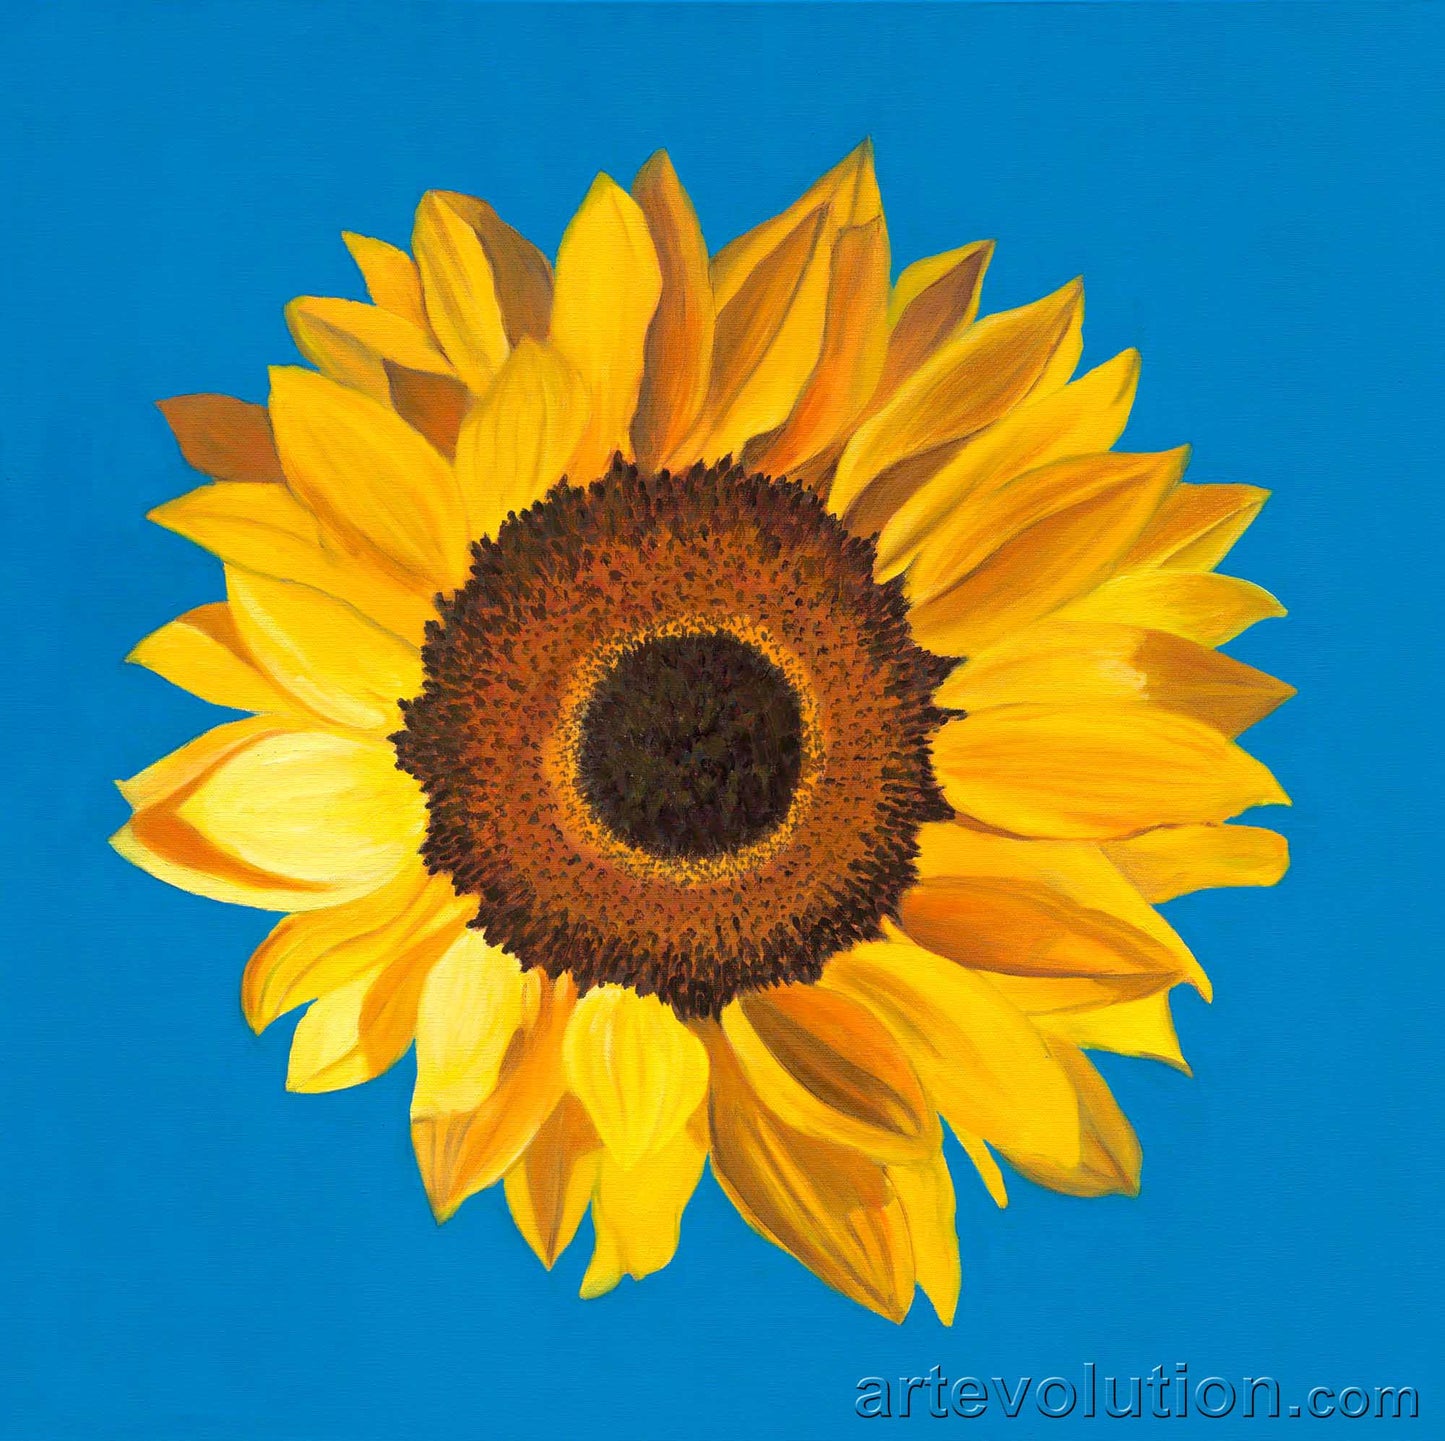 Portrait of a Sunflower